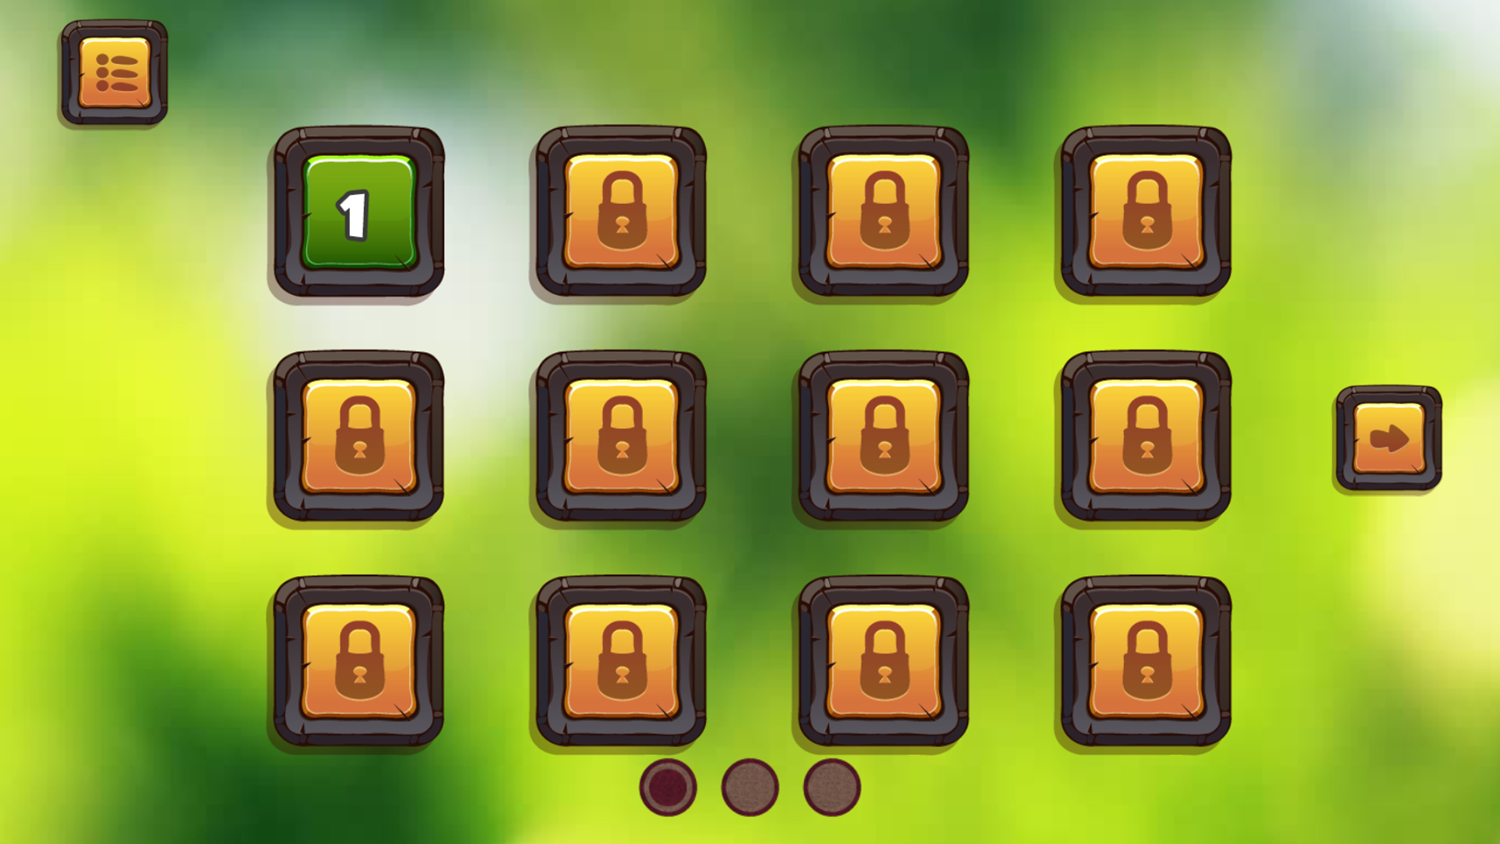 Mortar Watermelon Game Level Select Screenshot.